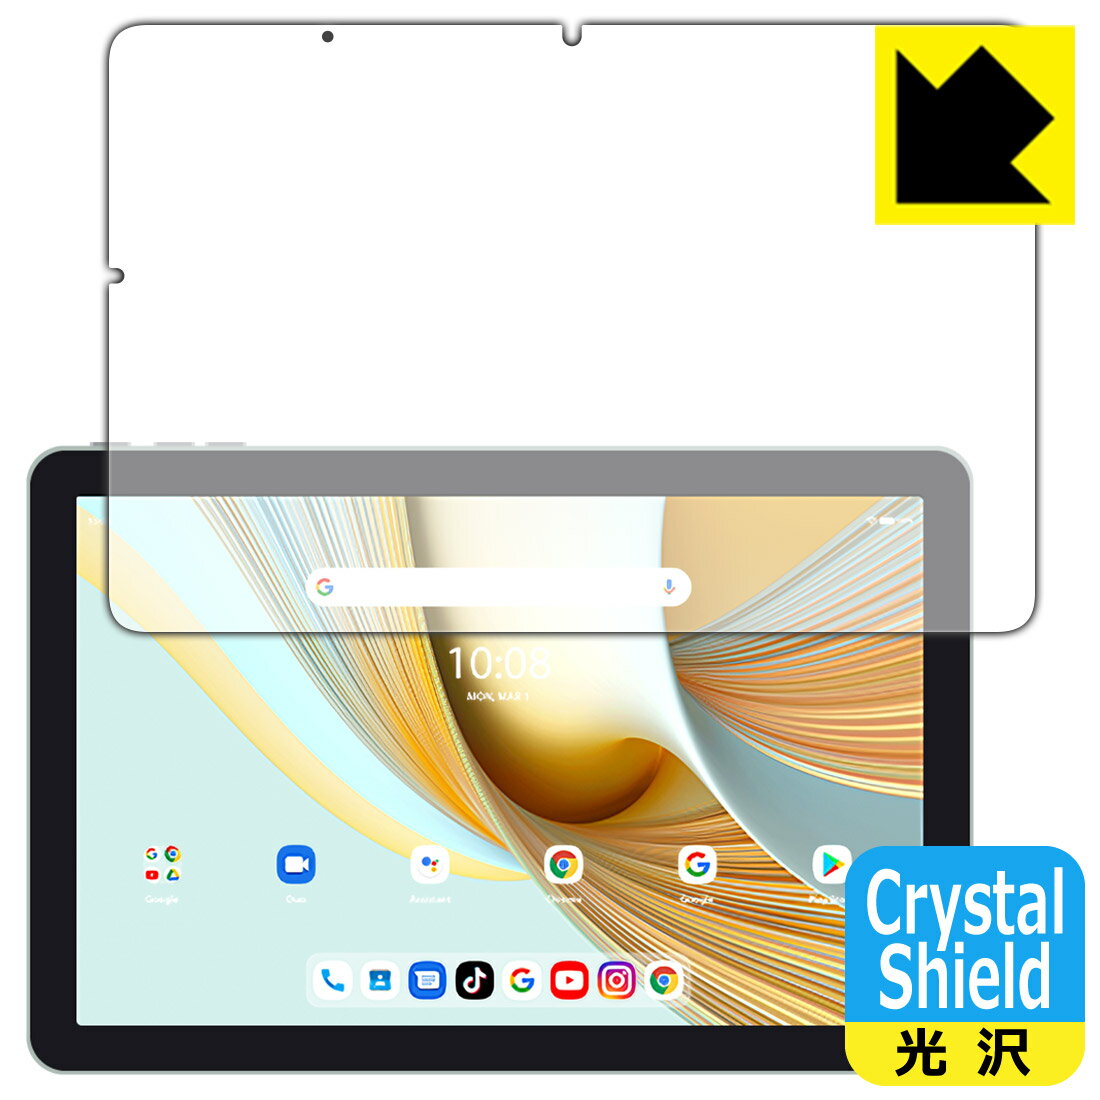 Crystal Shield【光沢】保護フィルム UMIDIGI G3 Tab (3枚セット) 日本製 自社製造直販